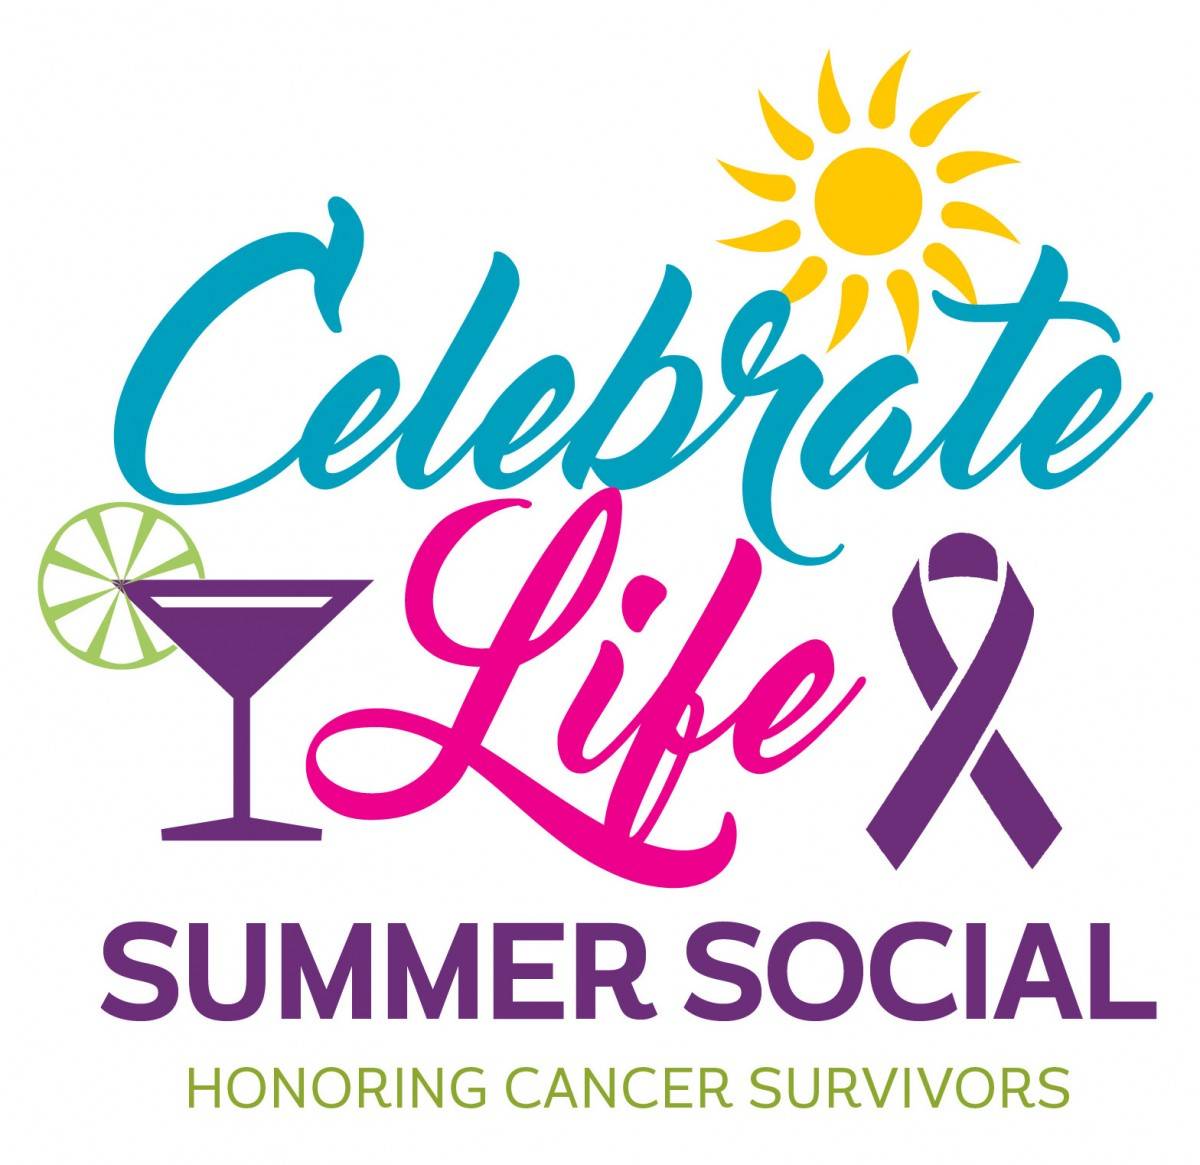 Celebrate Life logo that reads Summer Social Honoring Cancer Survivors